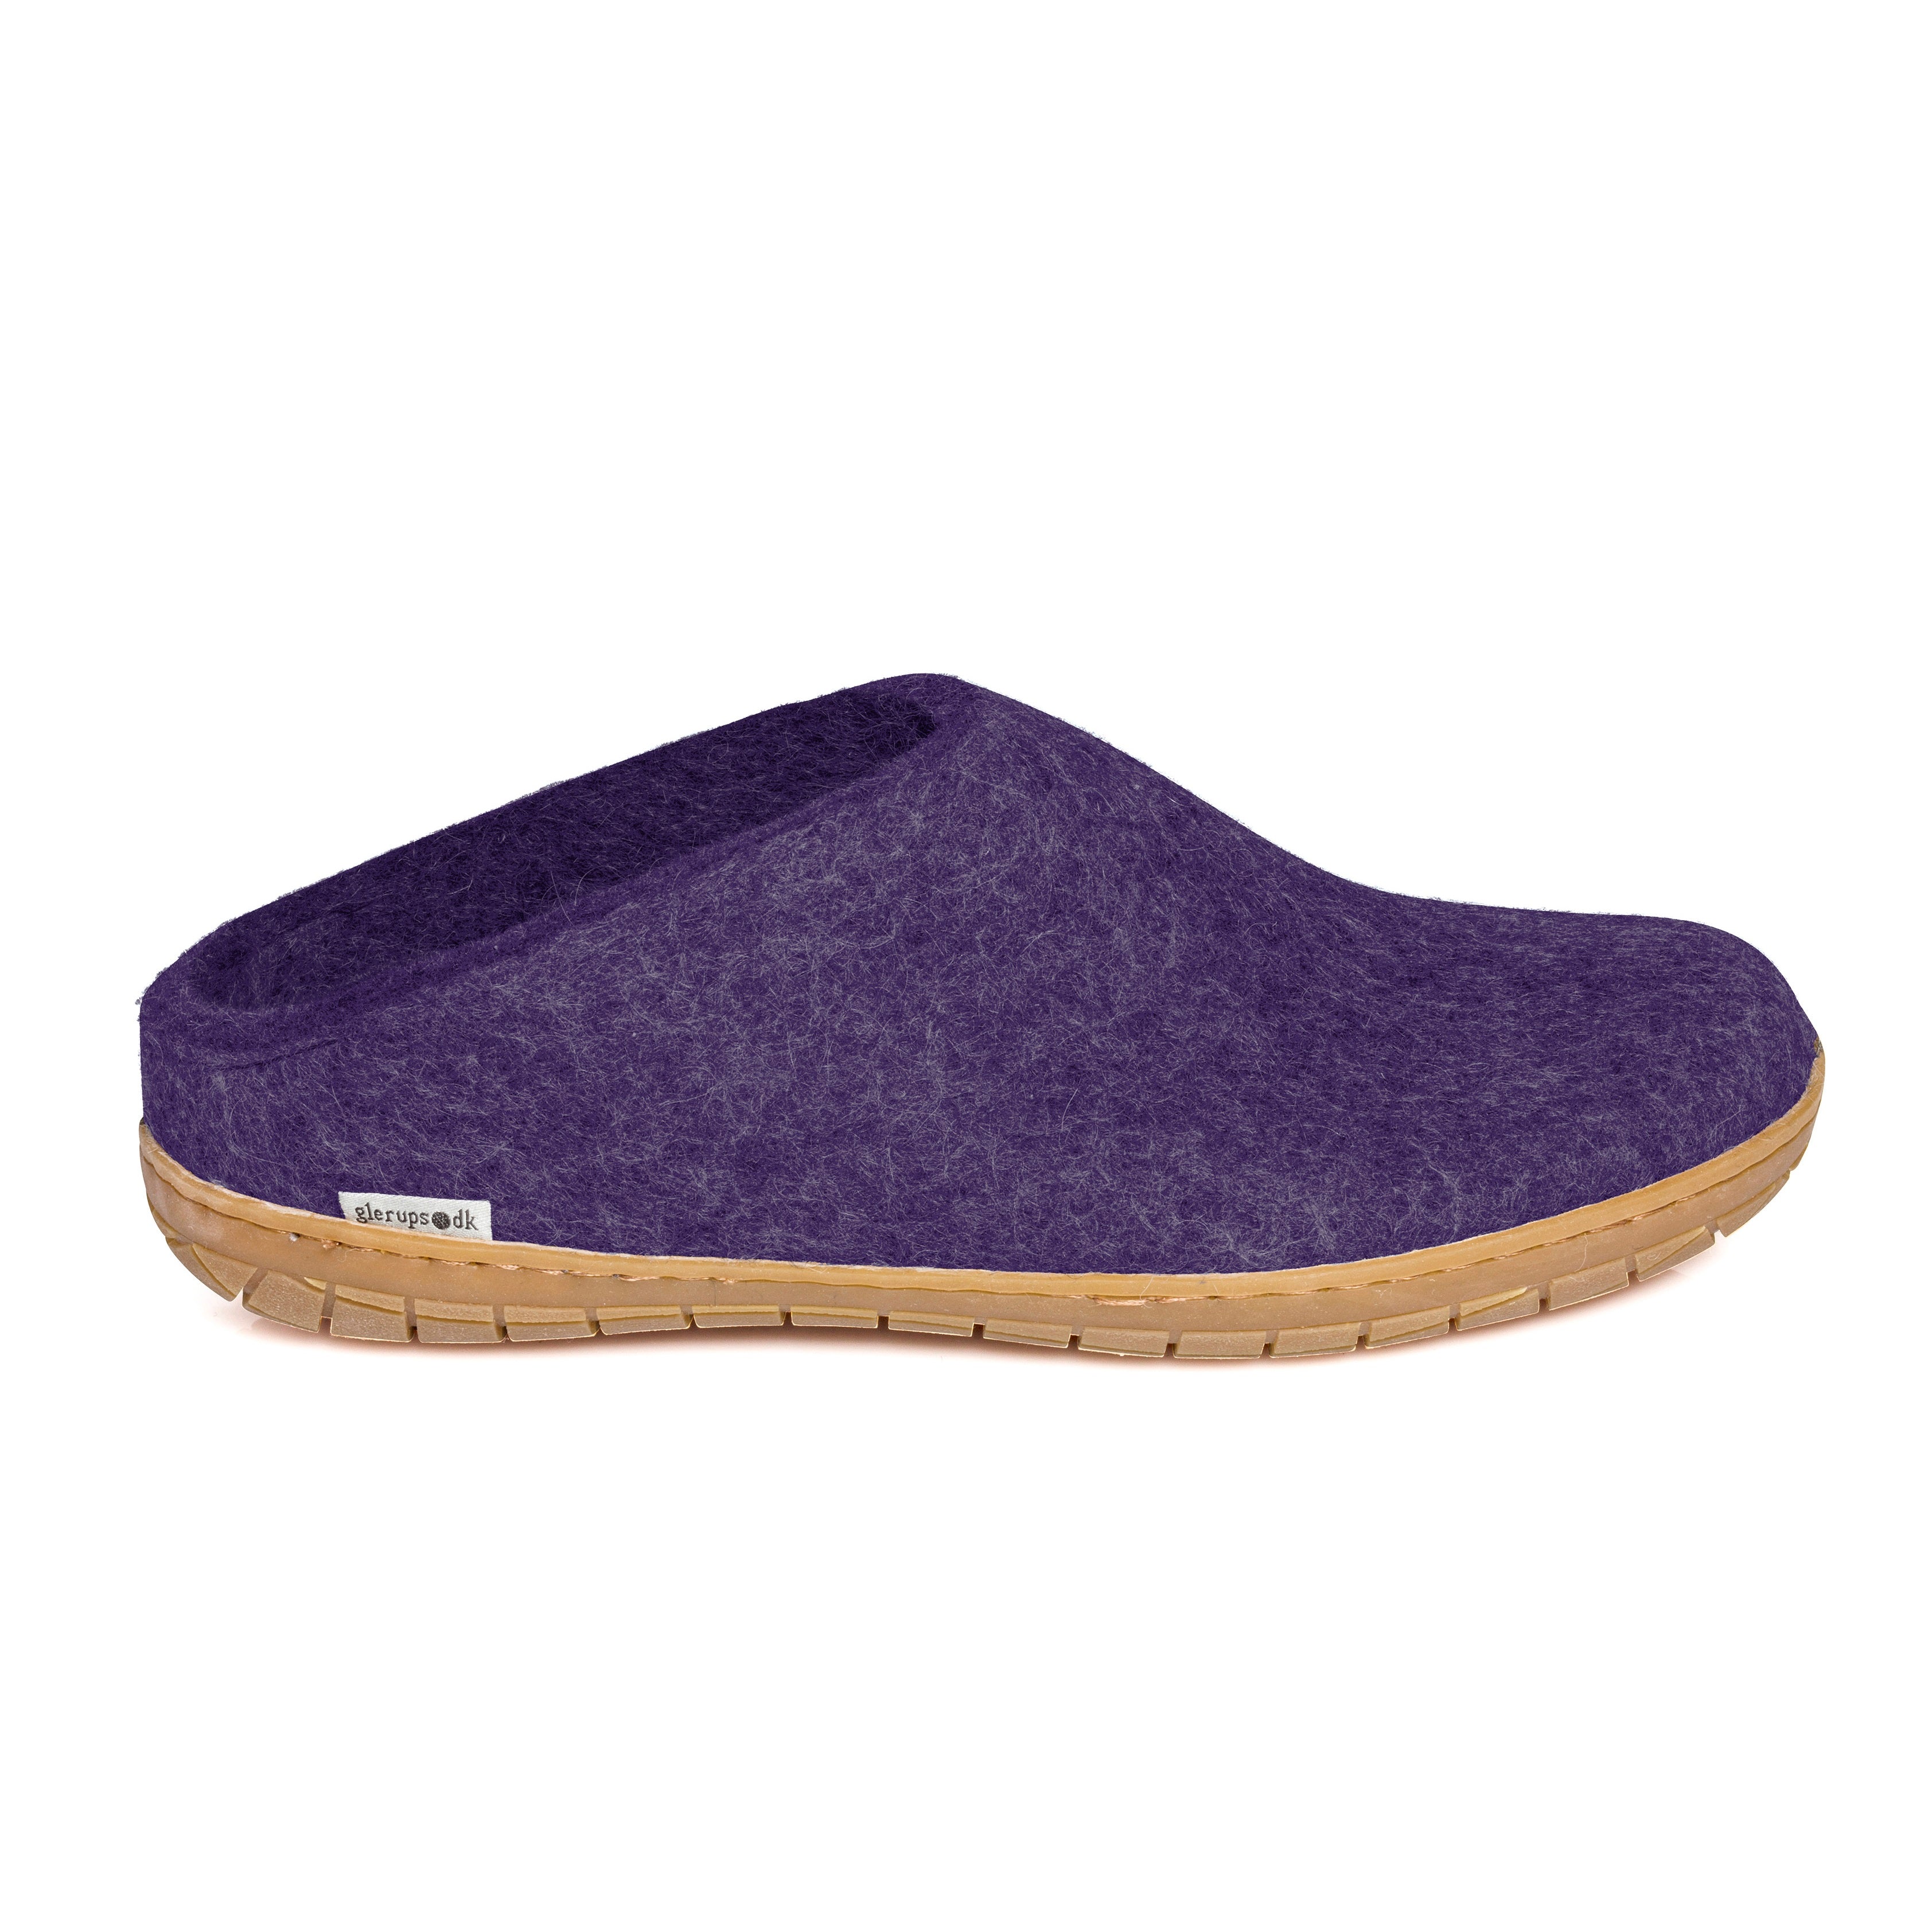 Glerups slipper slip-on rubber sole purple